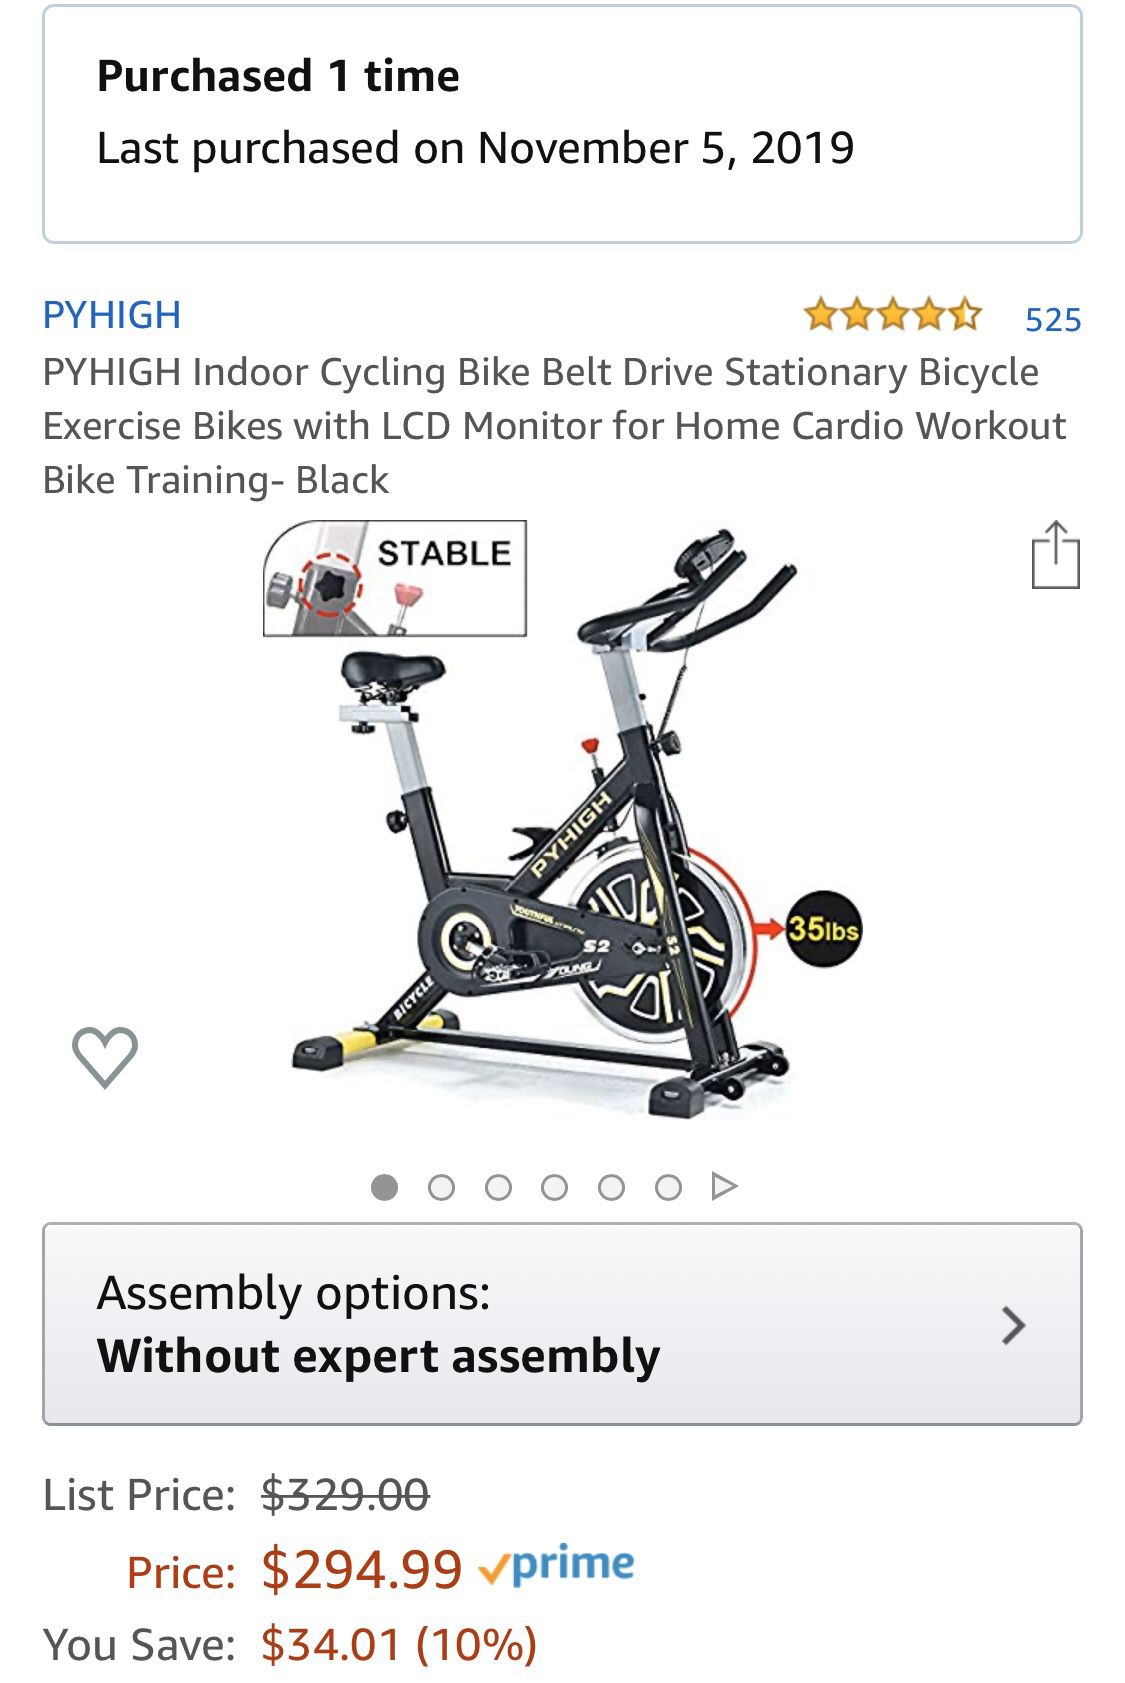 PYHIGH exercise bike